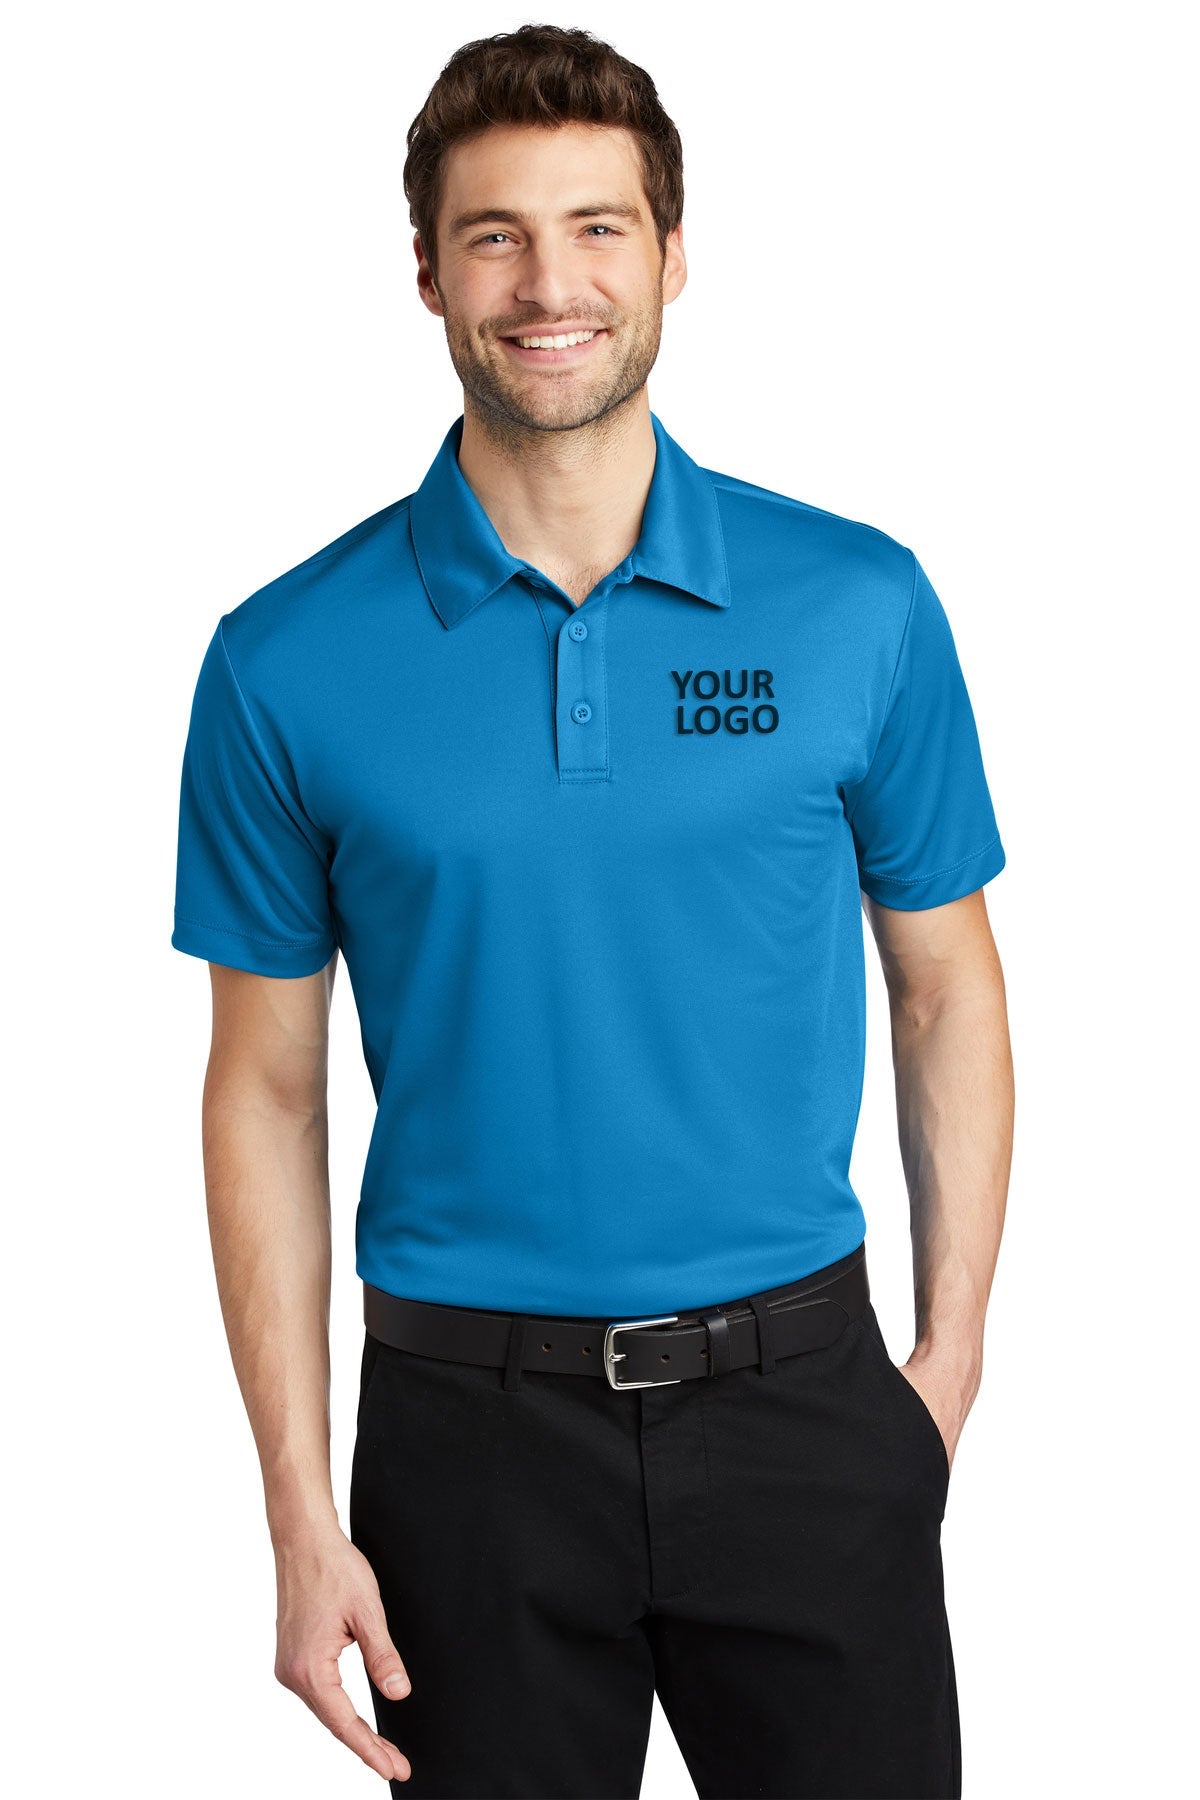 port authority brilliant blue k540 custom made polo shirts with logo